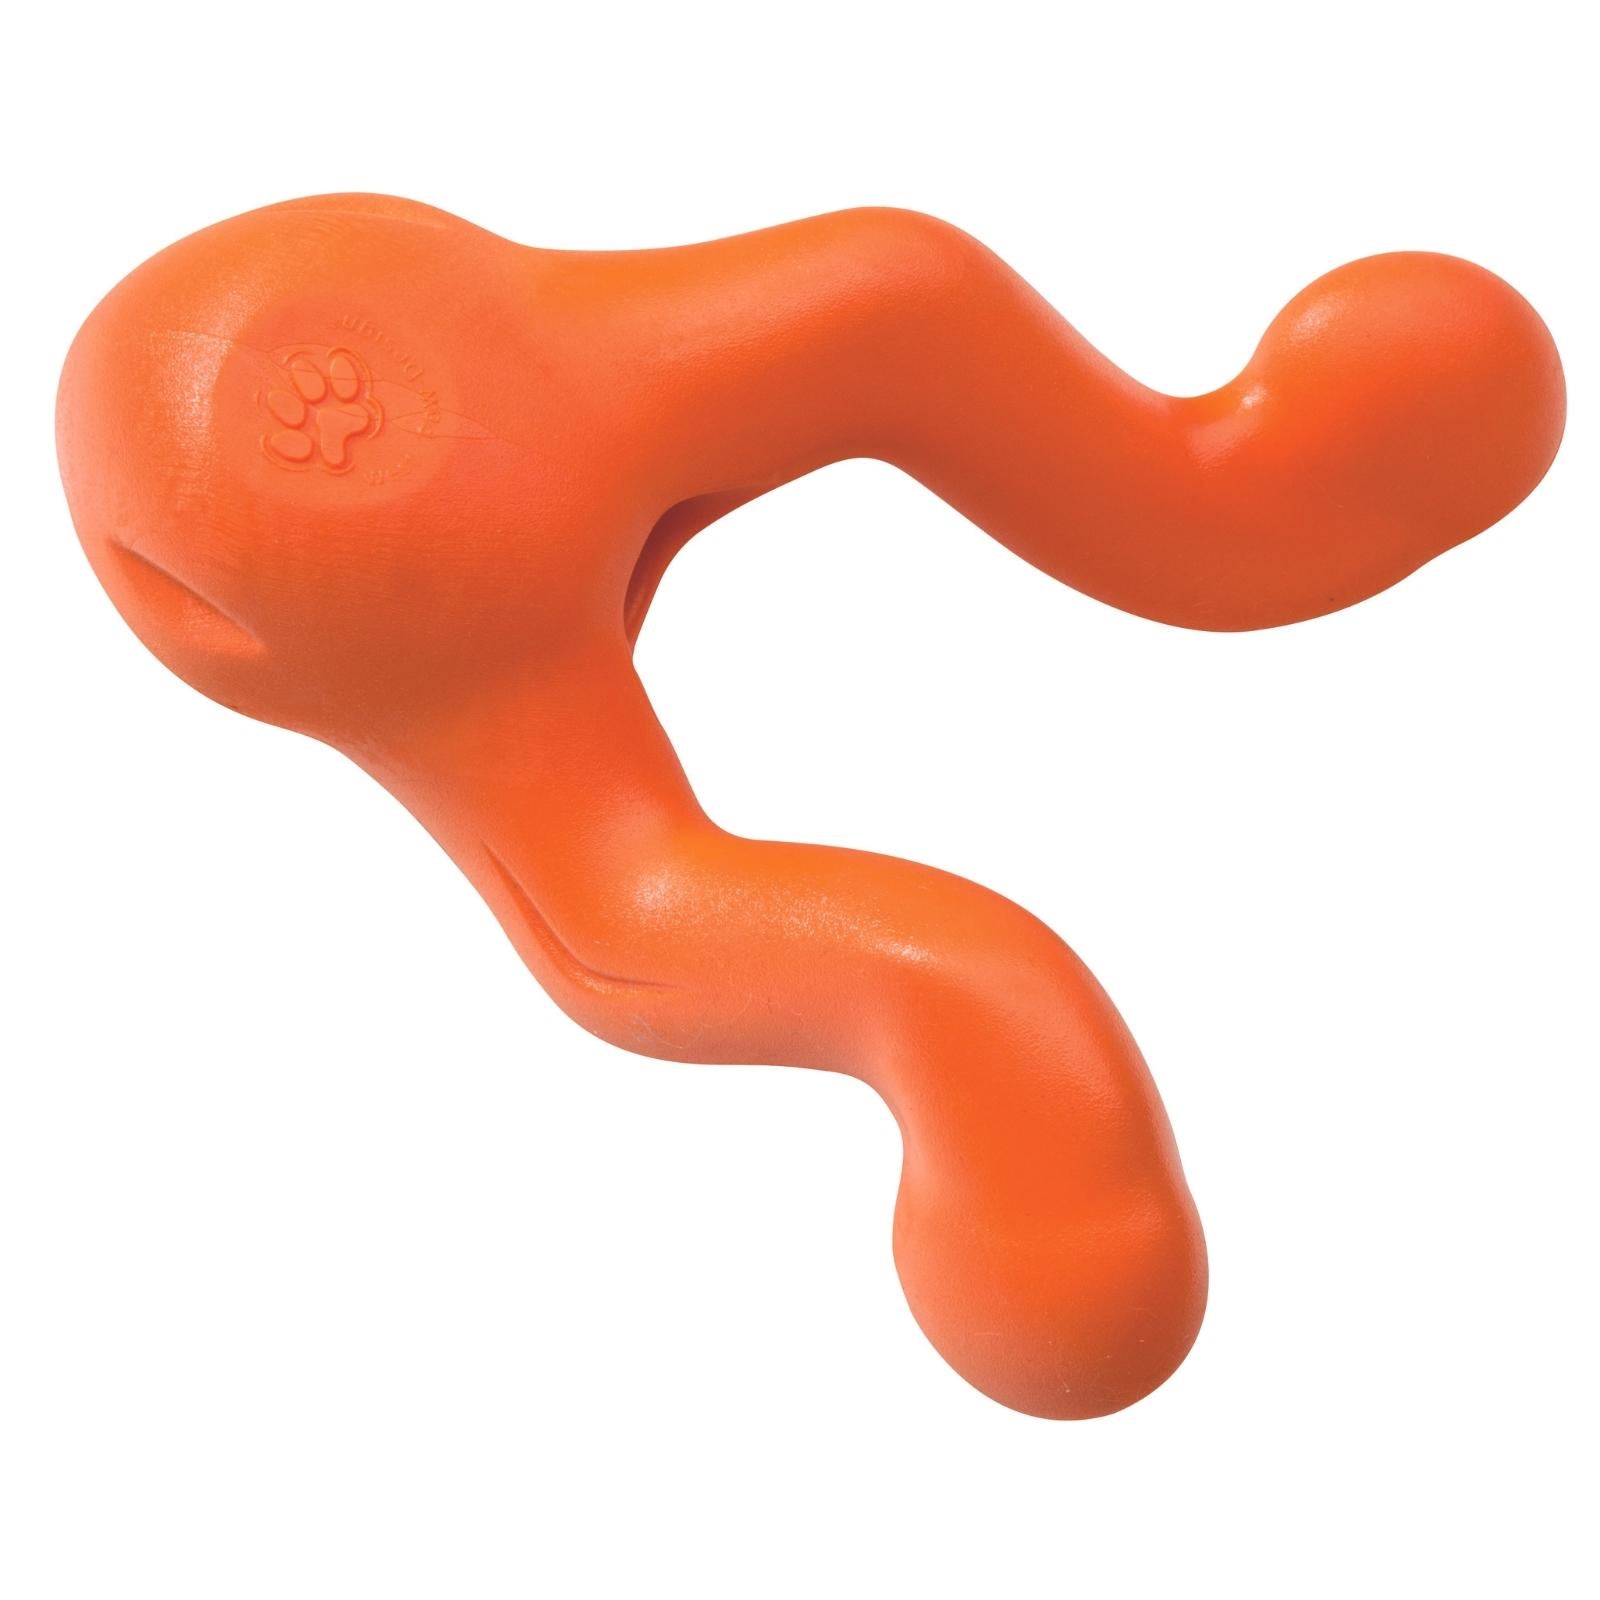 TIZZI de West Paw® color Naranja - Juguete Escondite de Premios para Perros